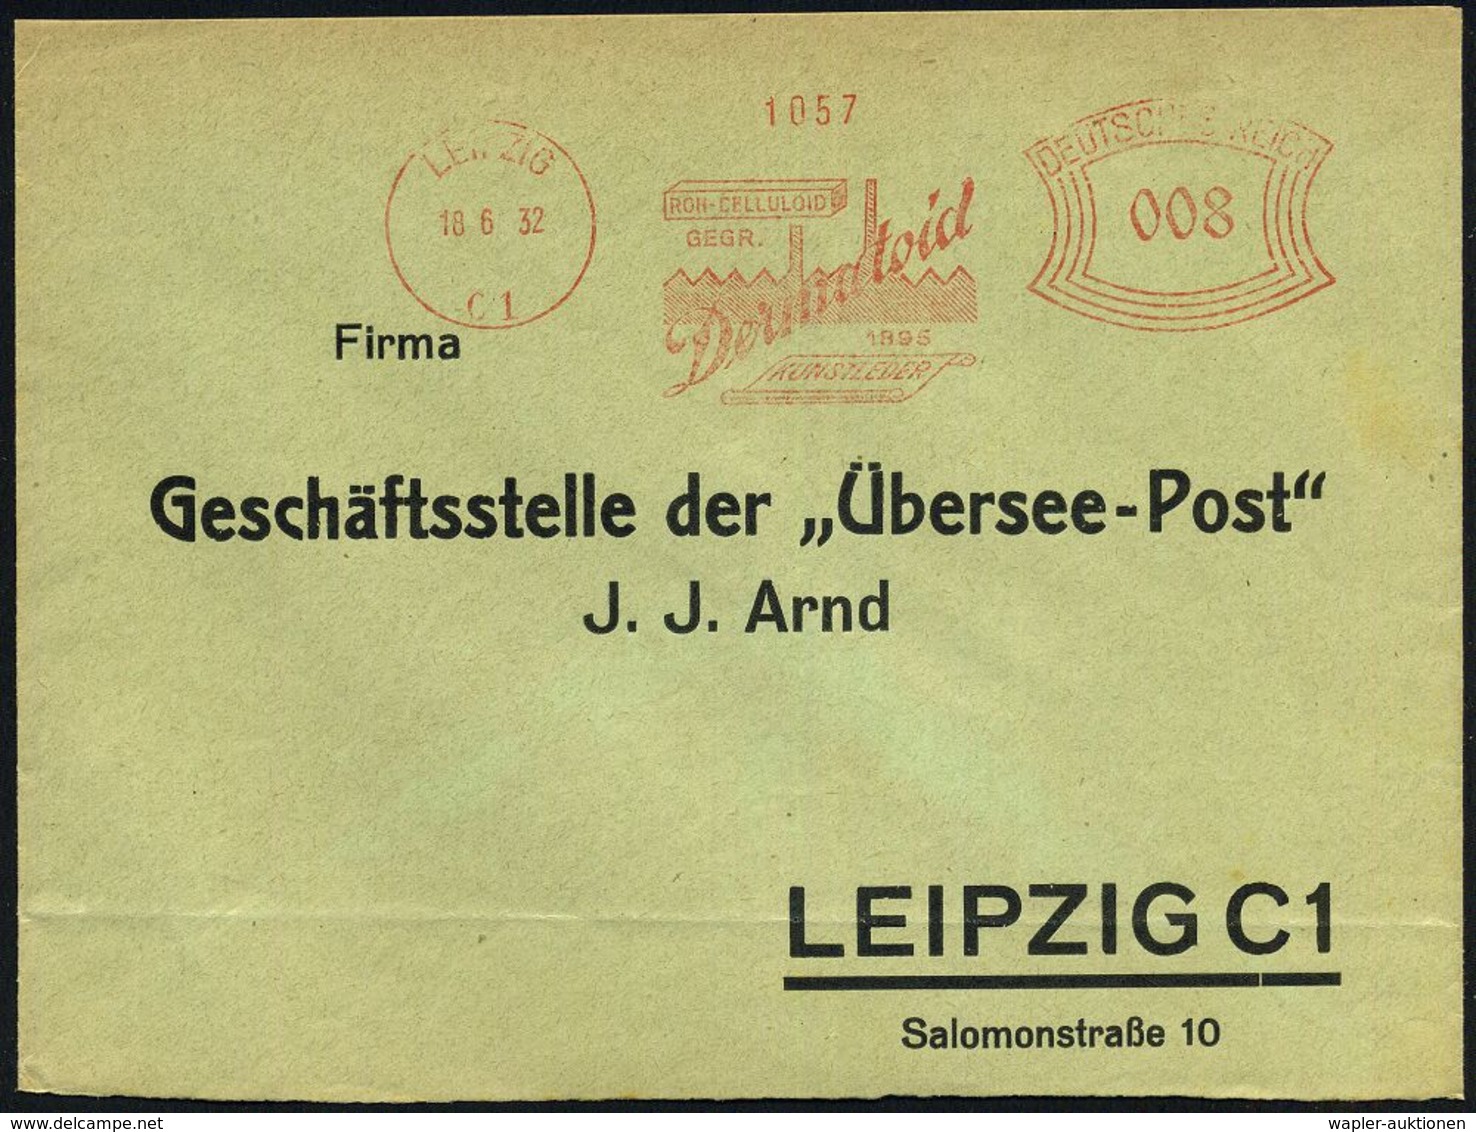 SPIELZEUG / SPIELZEUGMESSEN : LEIPZIG/ C 1/ ROH-CELLULOID/ Dermatoid/ GEGR./ 1895.. 1932 (18.6.) AFS (Fabrik-Silhouette) - Non Classés